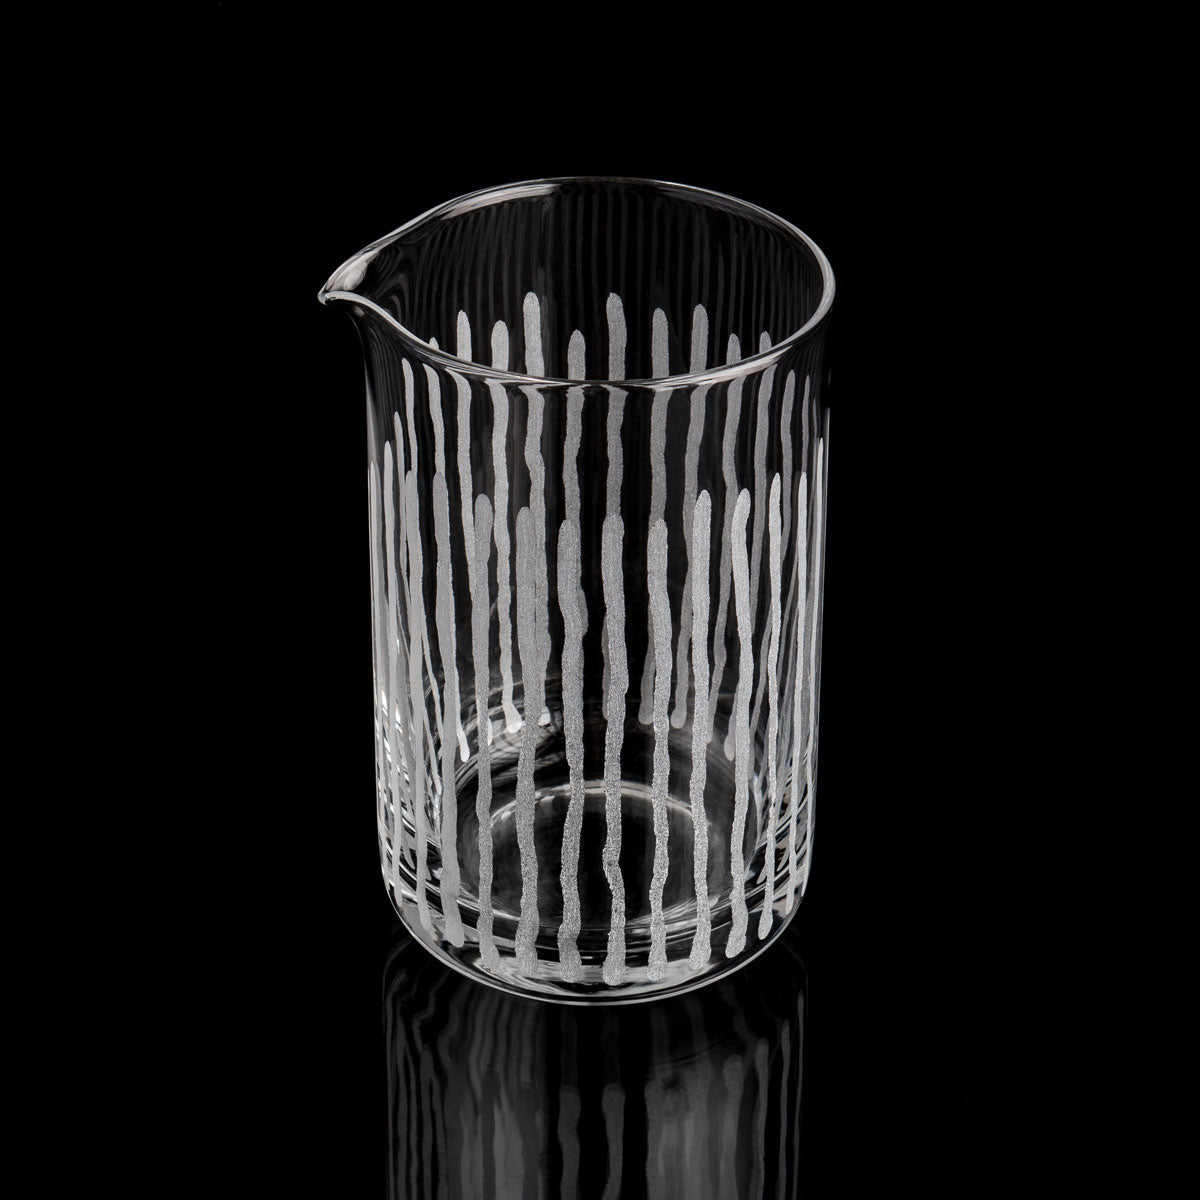 M-TAKA 550ml vertical striped mixing glass